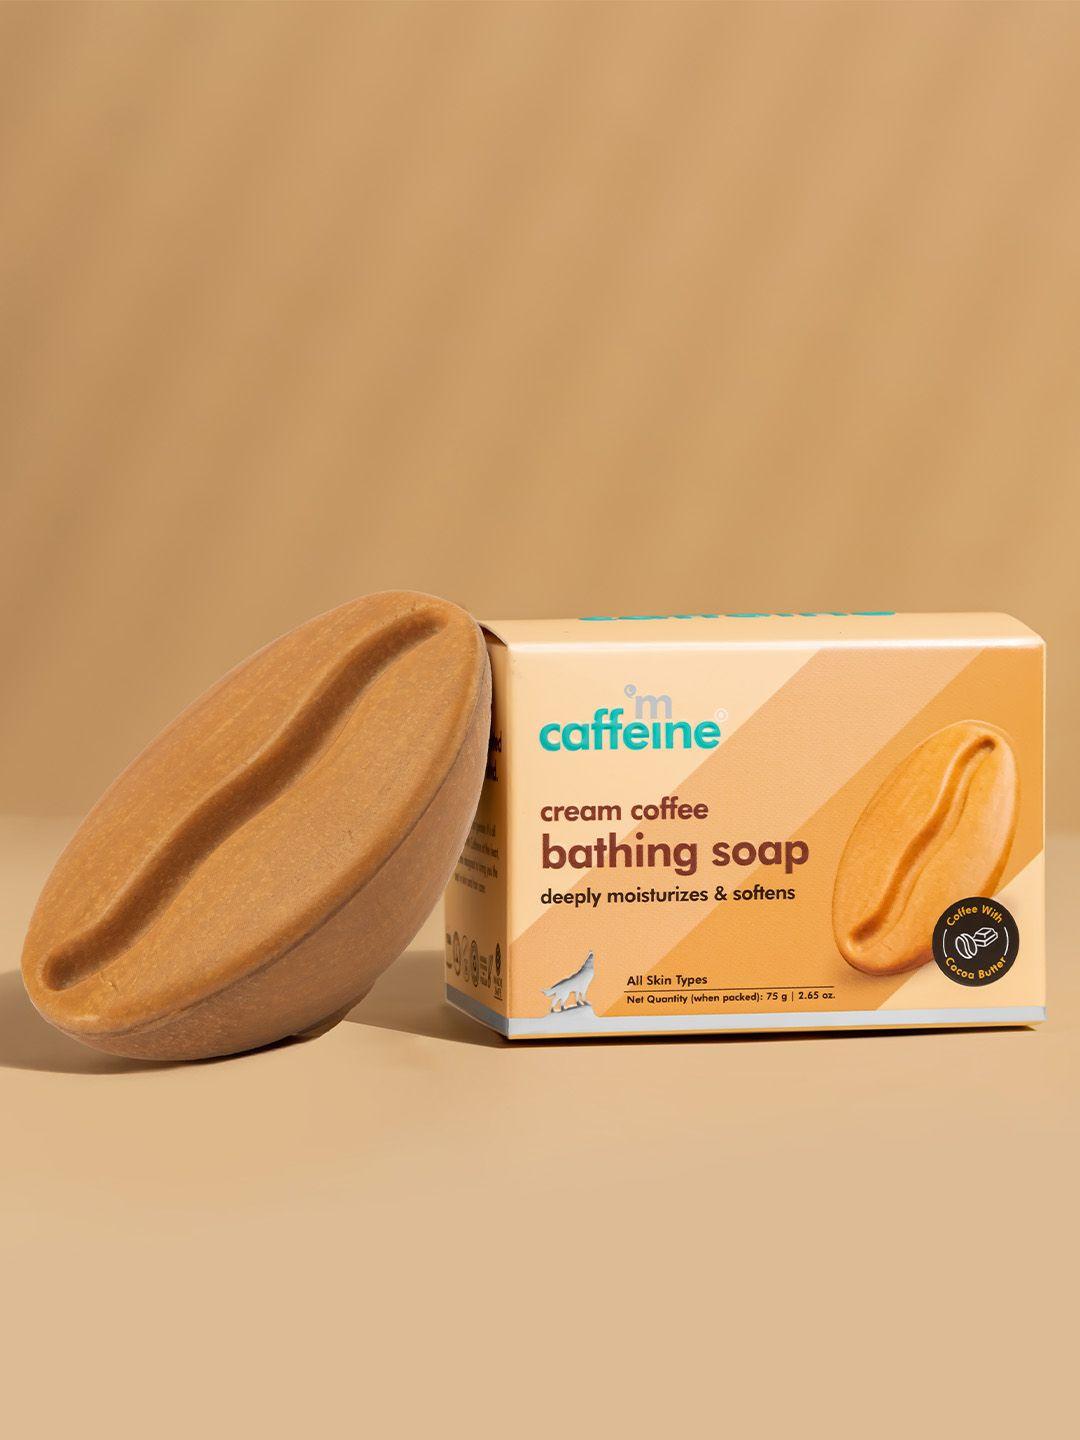 mcaffeine cream coffee bathing soap duo - 75g each